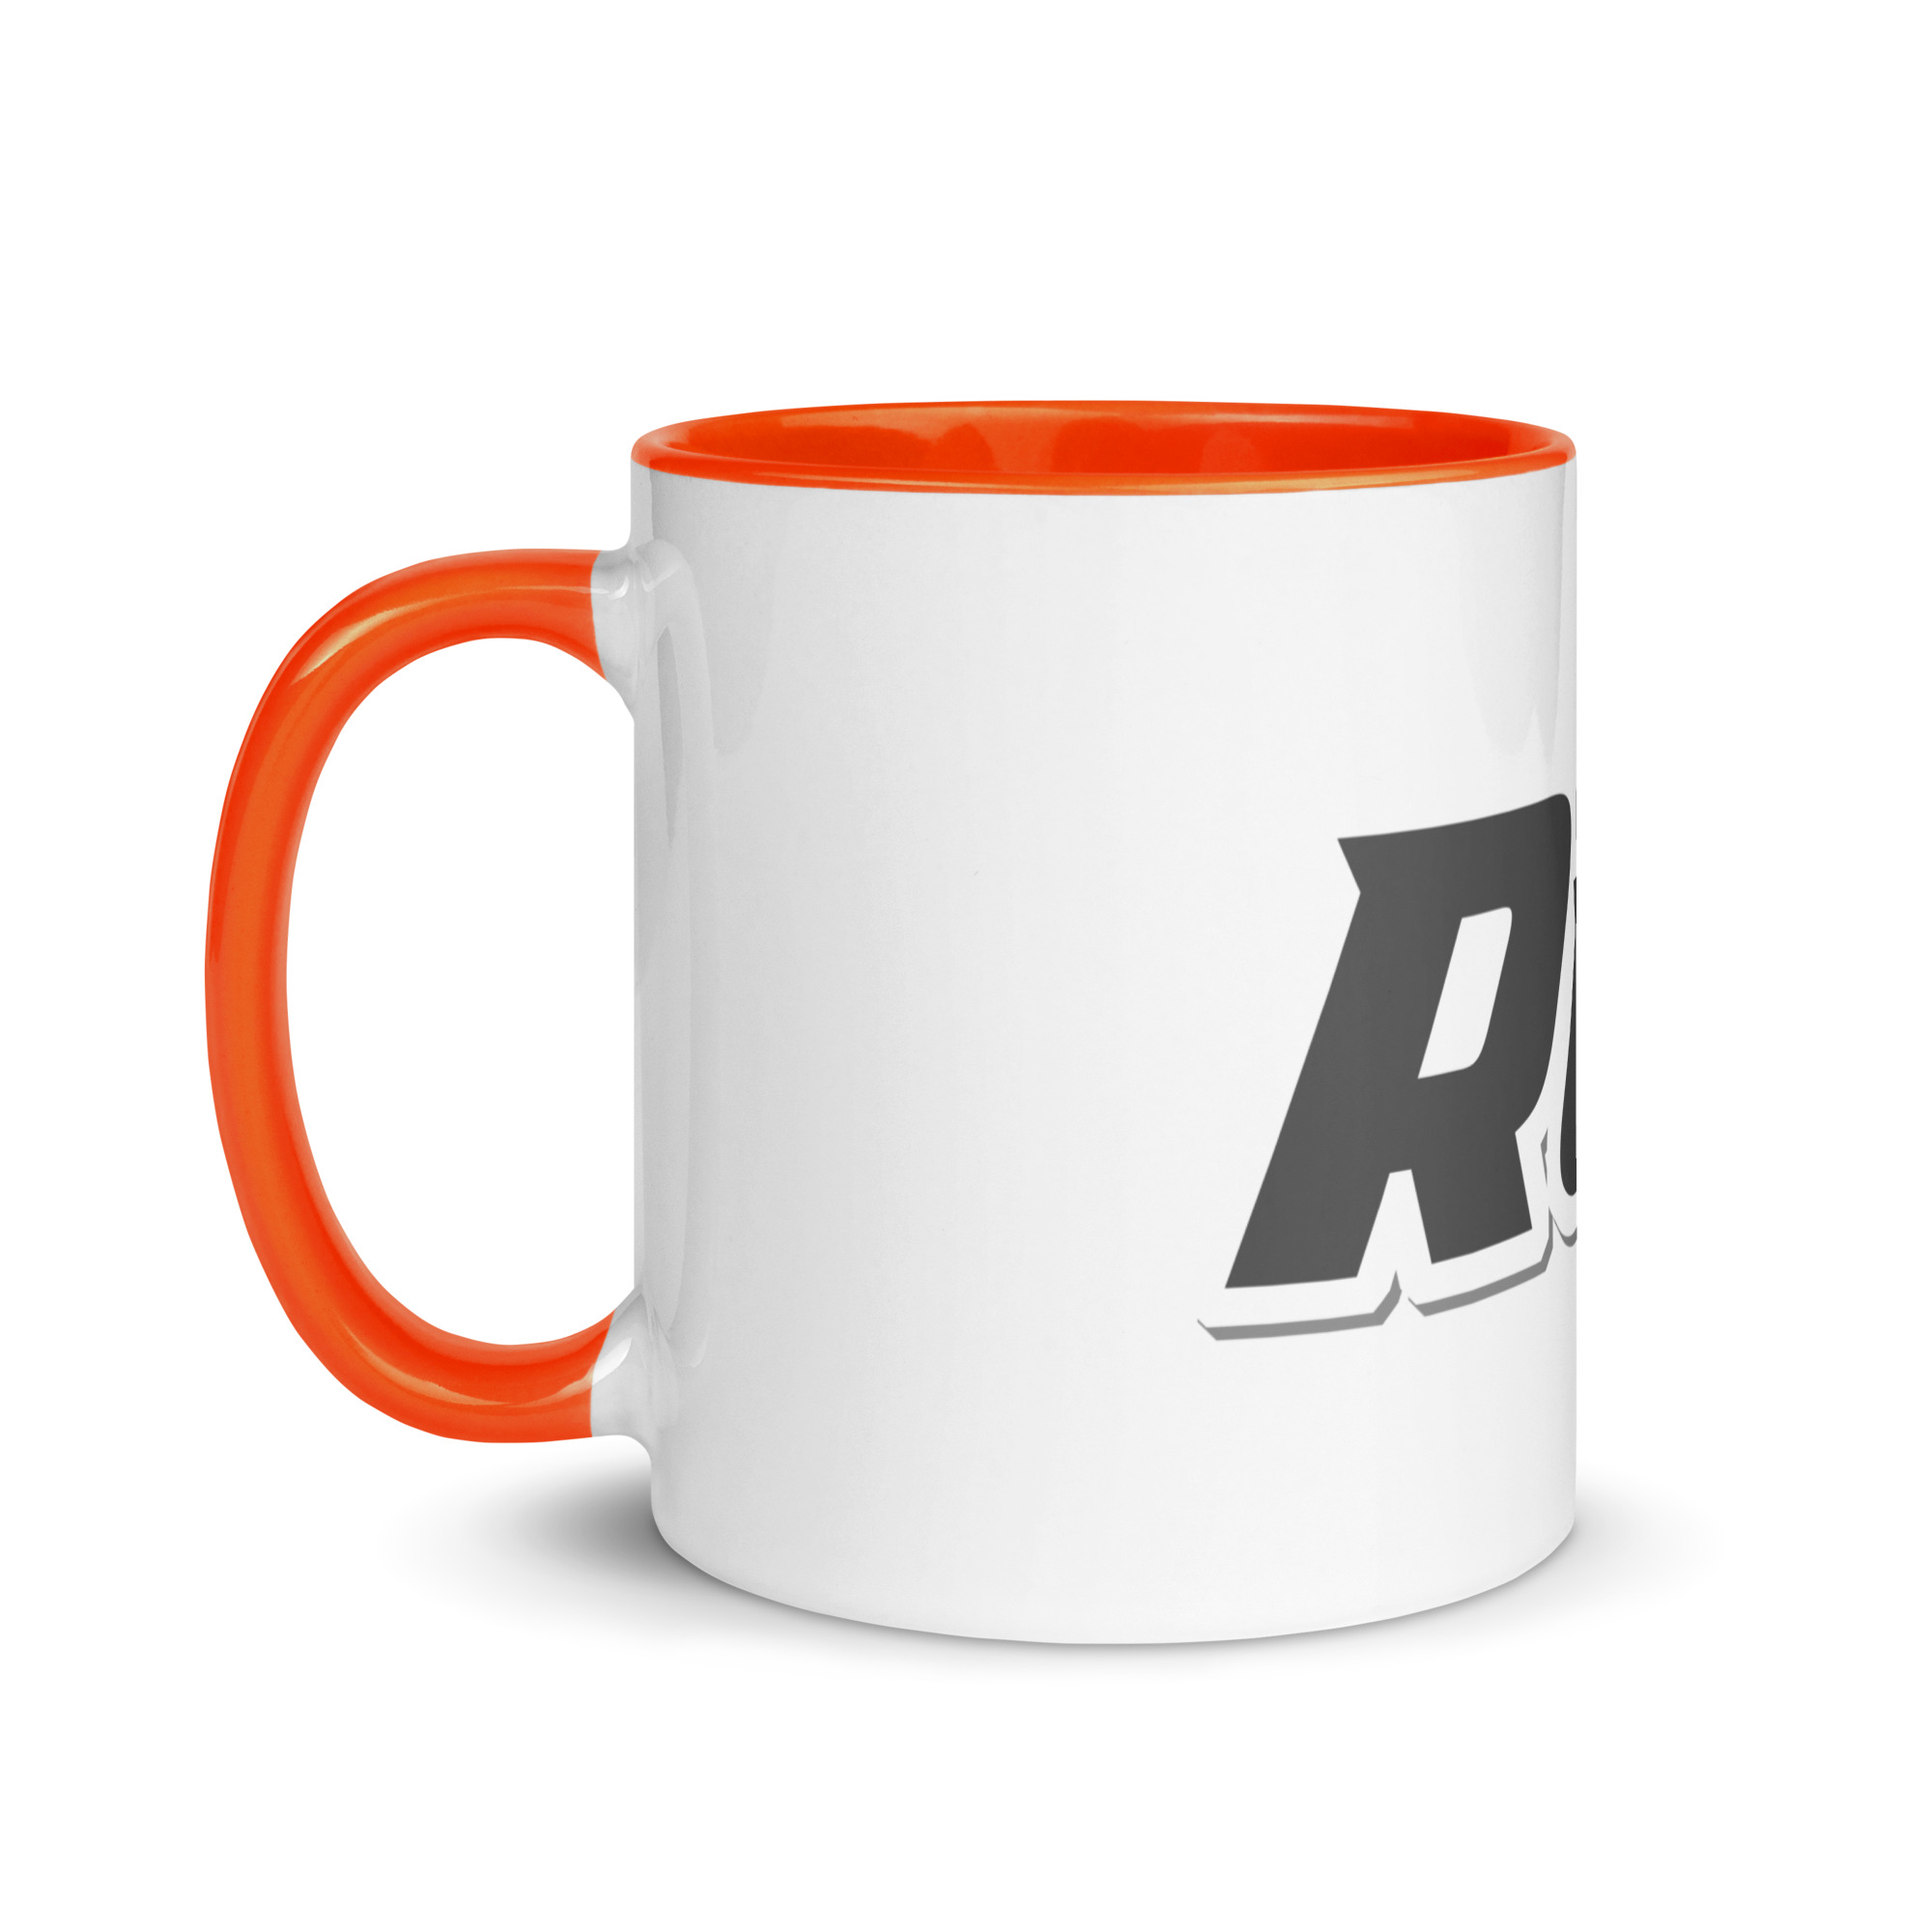 white-ceramic-mug-with-color-inside-orange-11-oz-left-6525b50608fa7.jpg